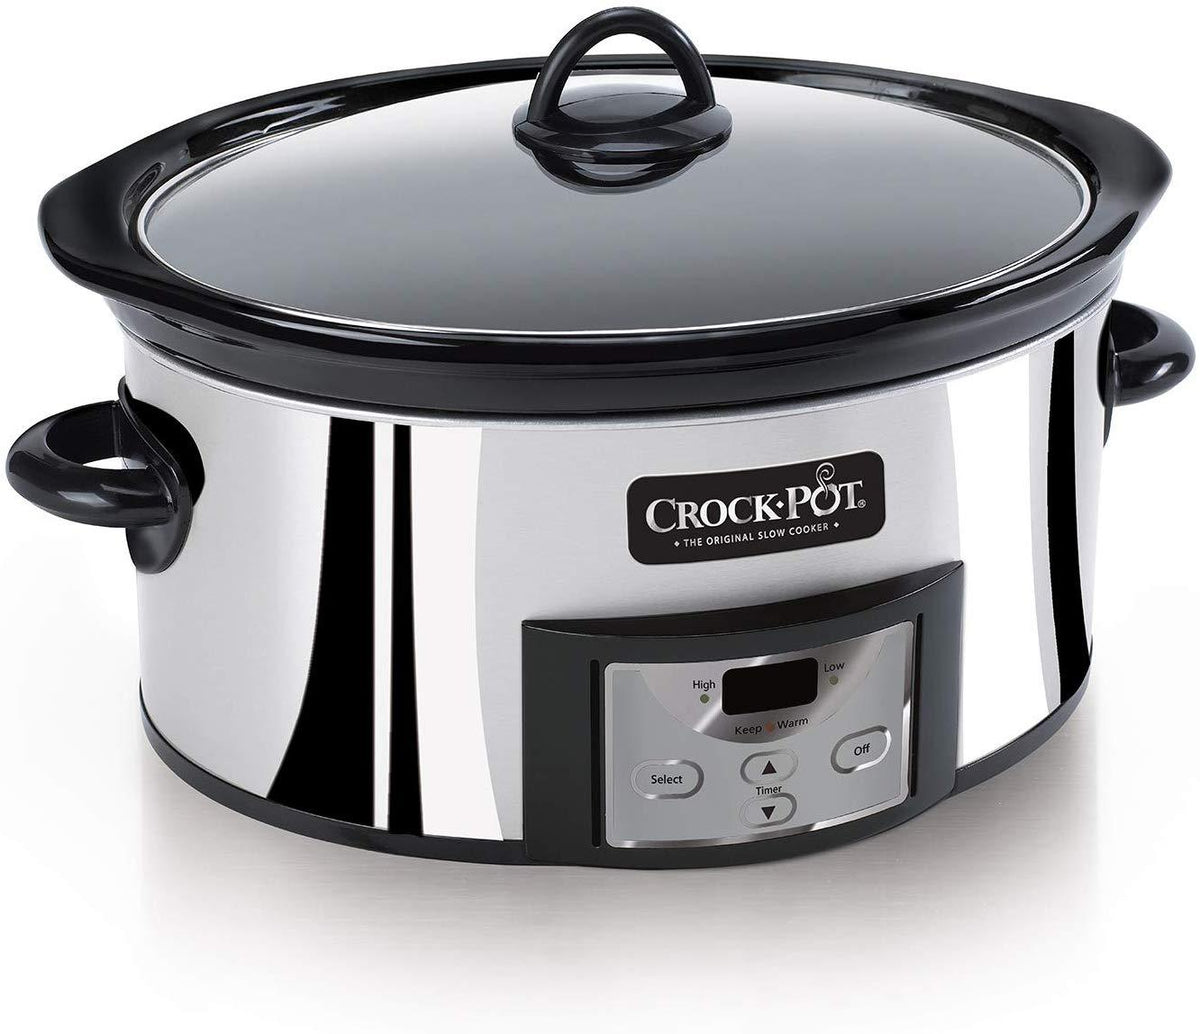  Crock-Pot Large 8 Quart Oval Manual Slow Cooker, Stainless  Steel (SCV800-S): Home & Kitchen